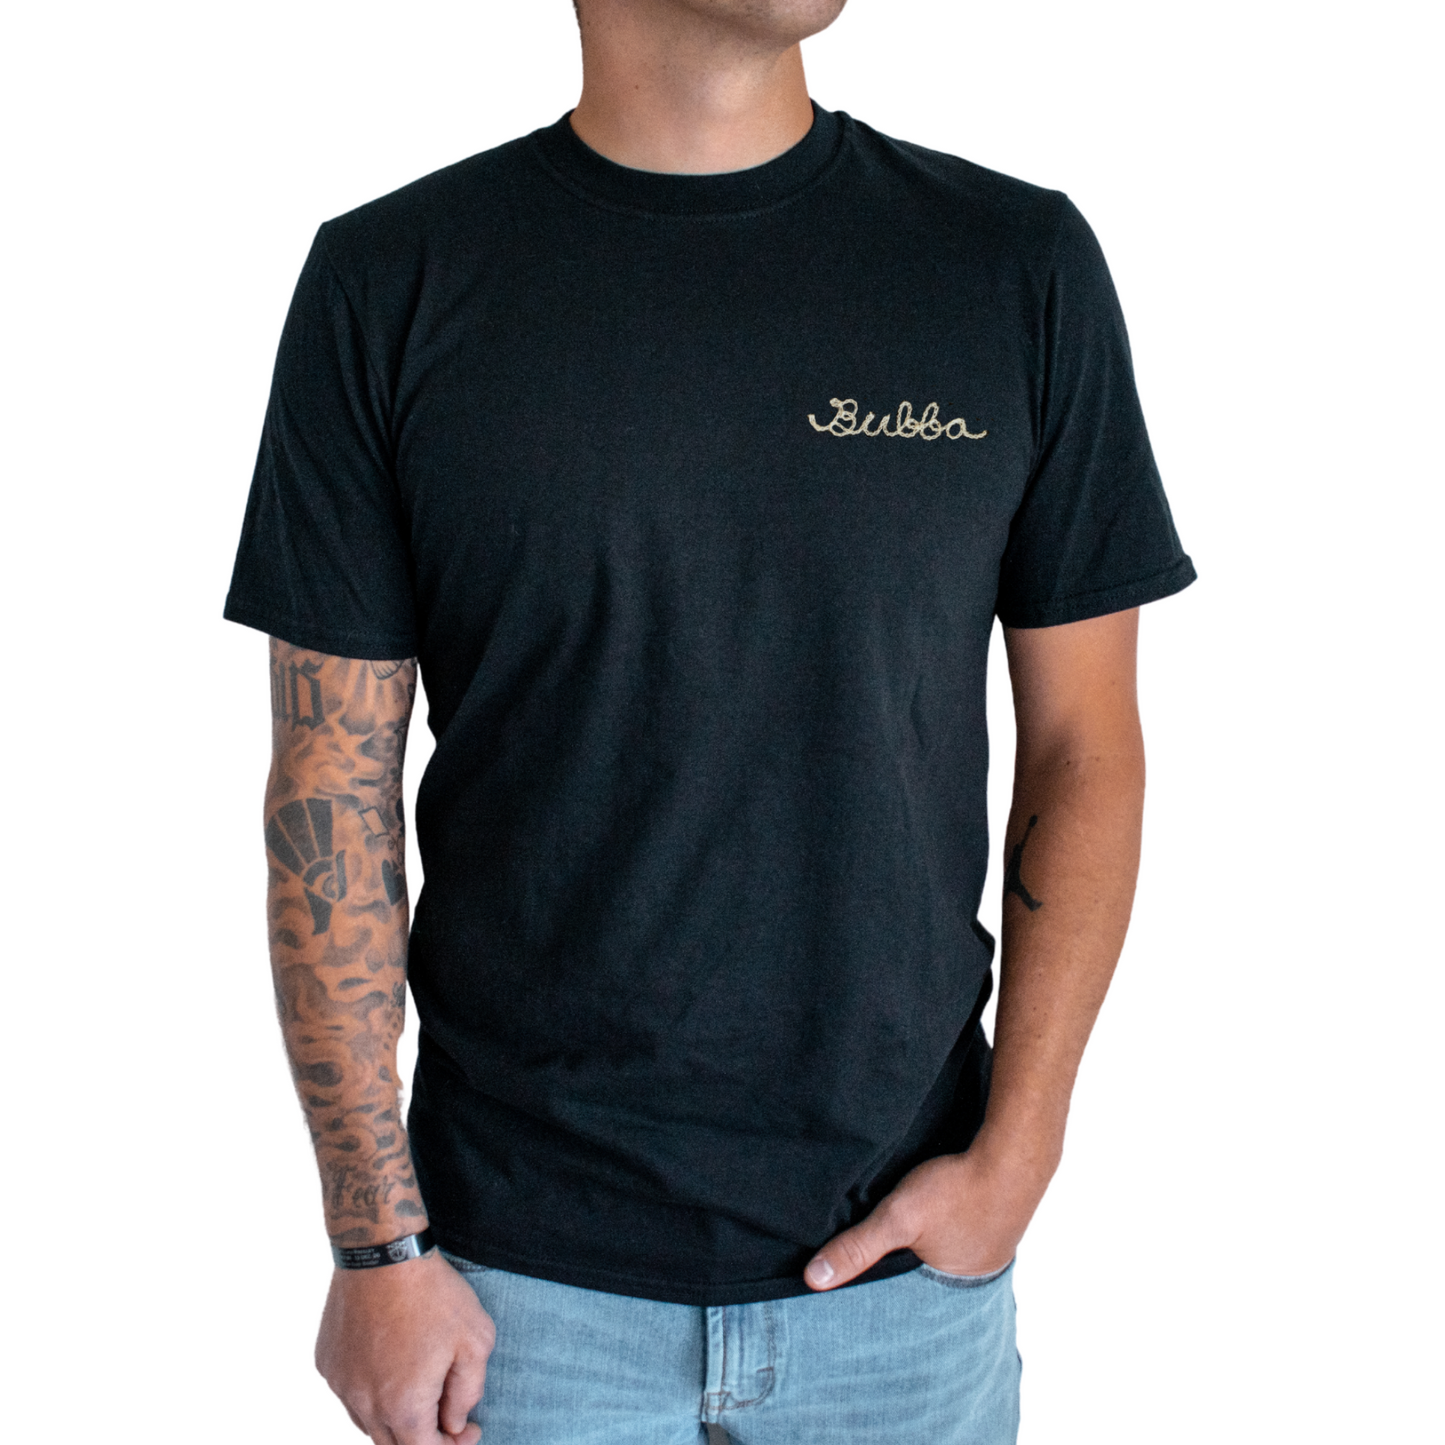 The Adult Chainstitch T-Shirt - Black